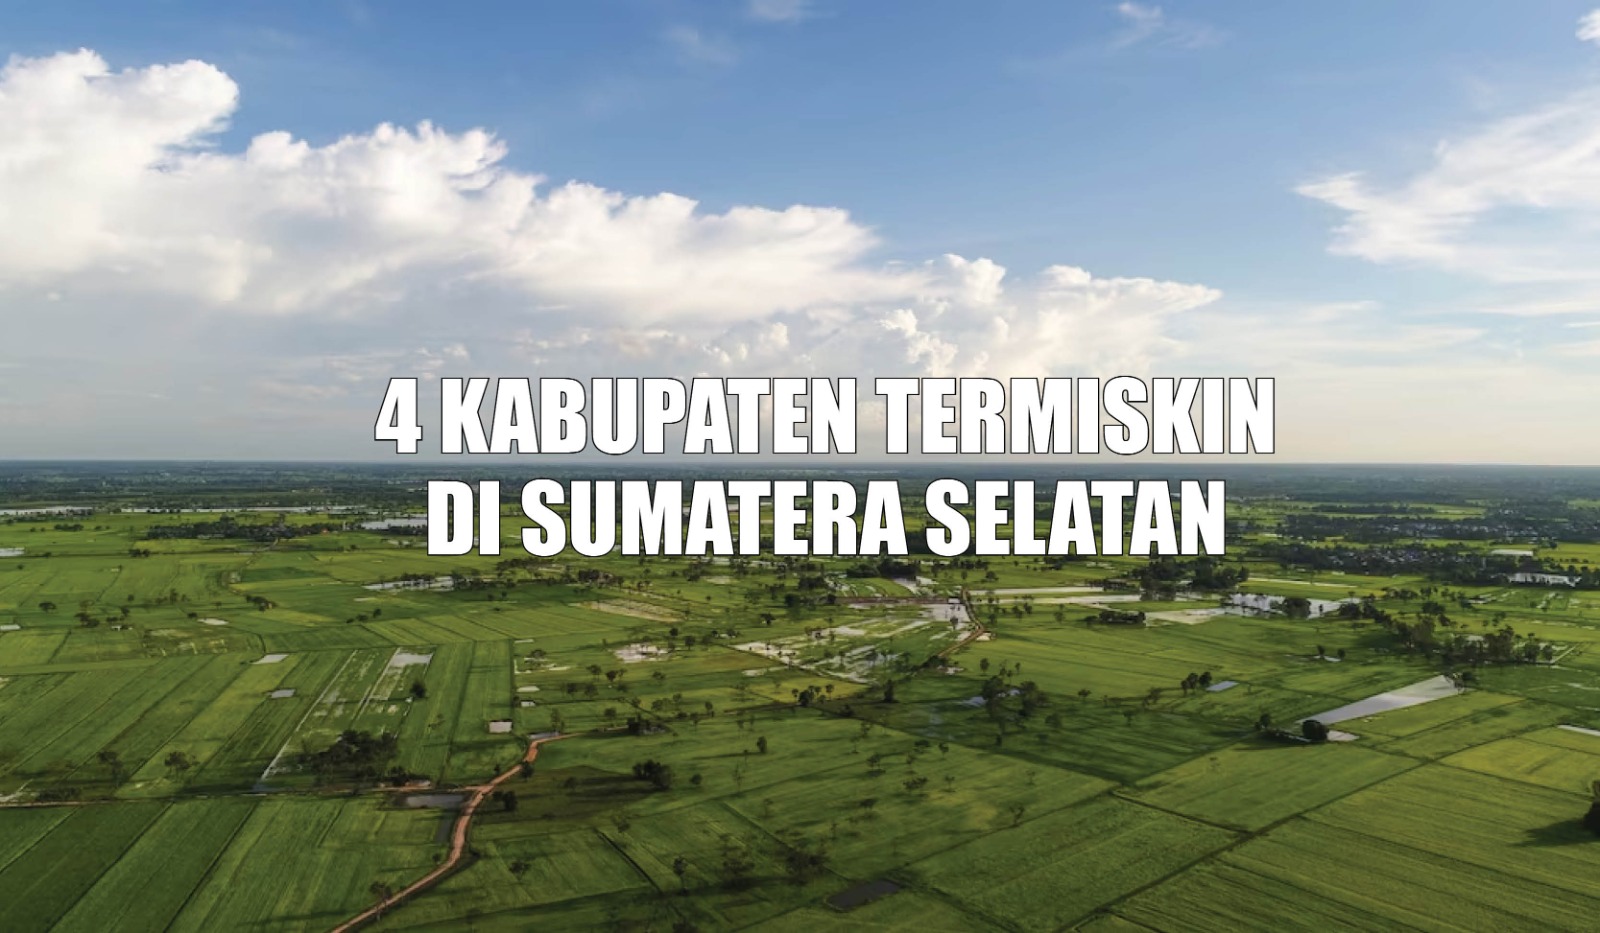 4 Kabupaten Termiskin di Sumatera Selatan, Jelas Bukan Pagar Alam, Justru Kabupaten Ini Juaranya